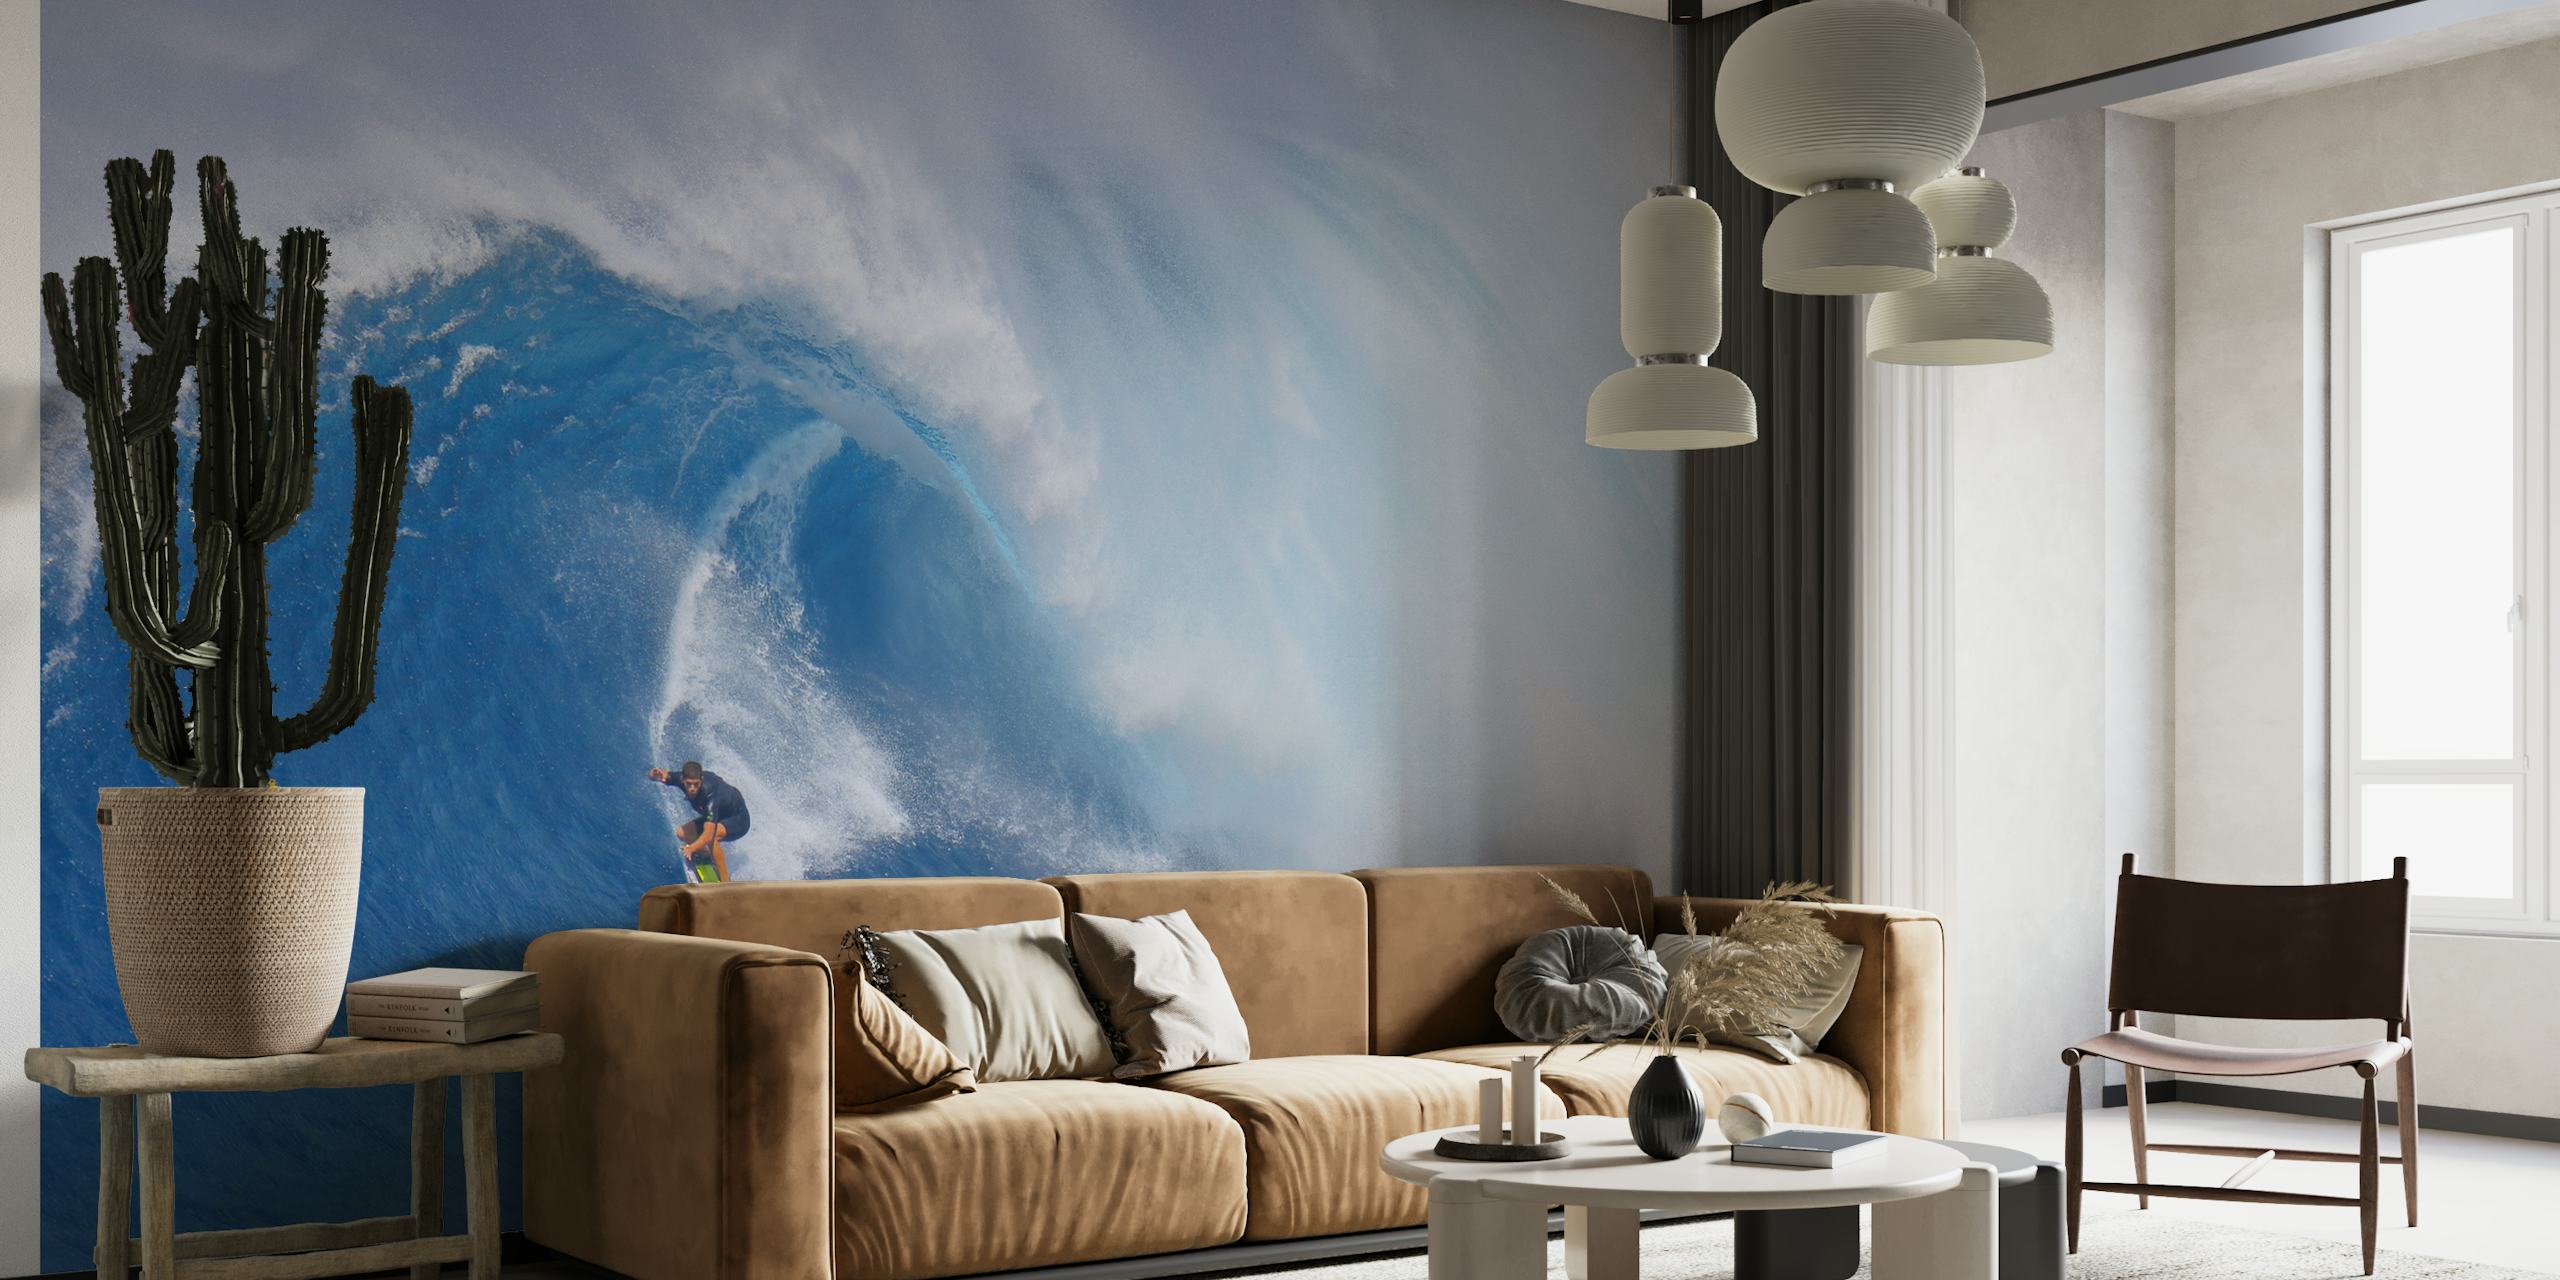 Surfare som rider på en gigantisk våg i tapeten "Surfing Jaws".